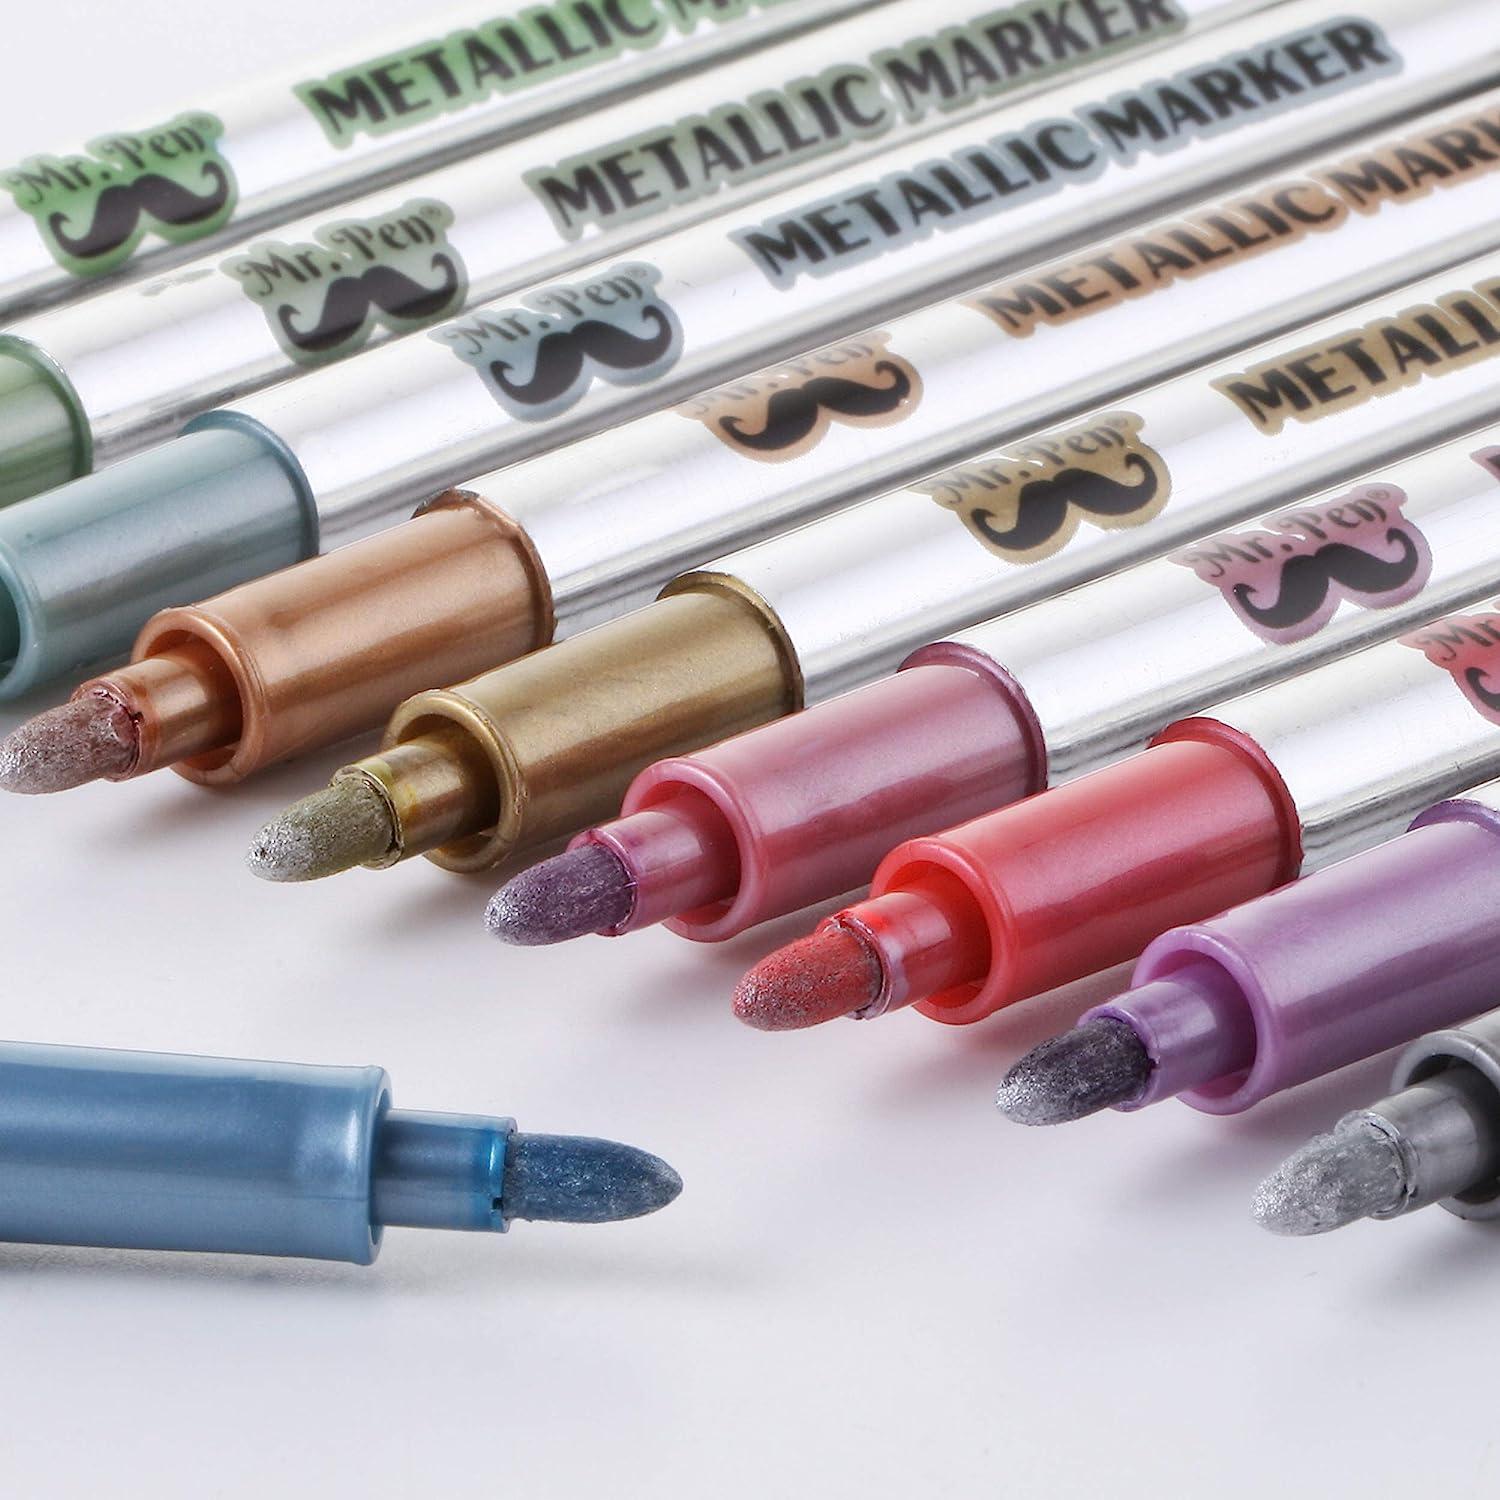 Mr. Pen- Metallic Paint Markers,10 Colors, Metallic Markers for Black  Paper, Rock Painting, Card Making, Ceramics, Metal, Glass, DIY Photo Album